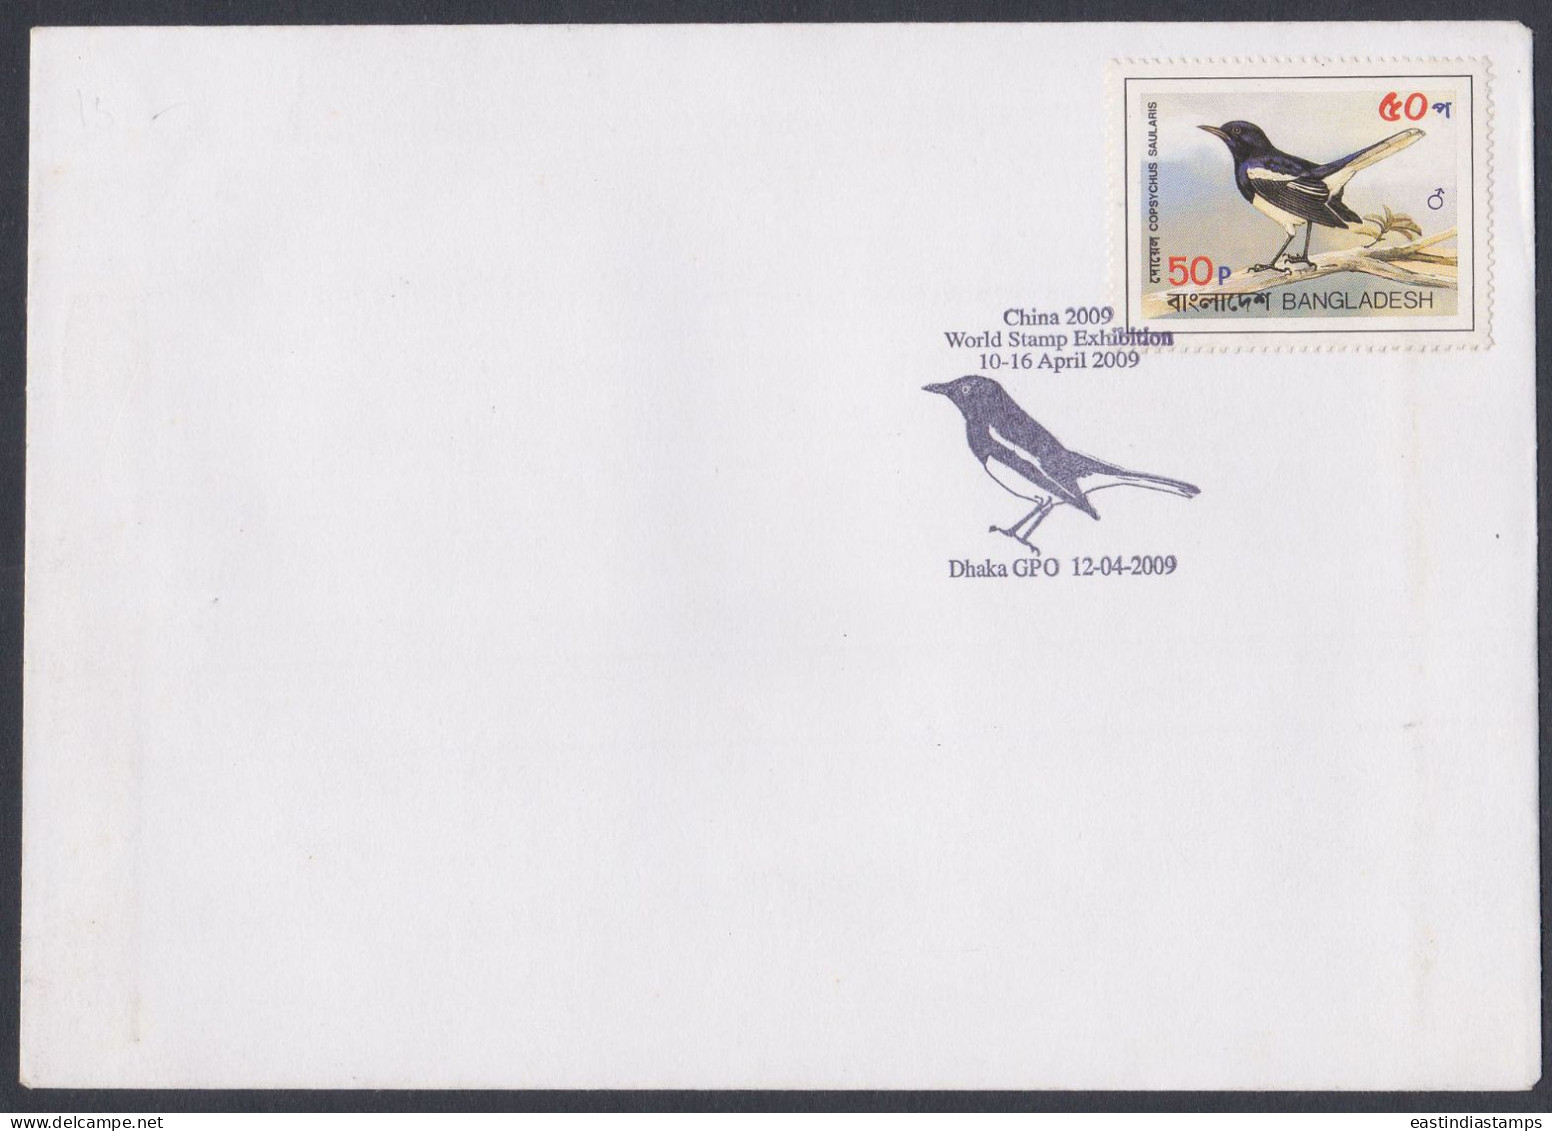 Bangladesh 2009 FDC China World Stamp Exhibition, Bird, Birds, First Day Cover - Bangladesh